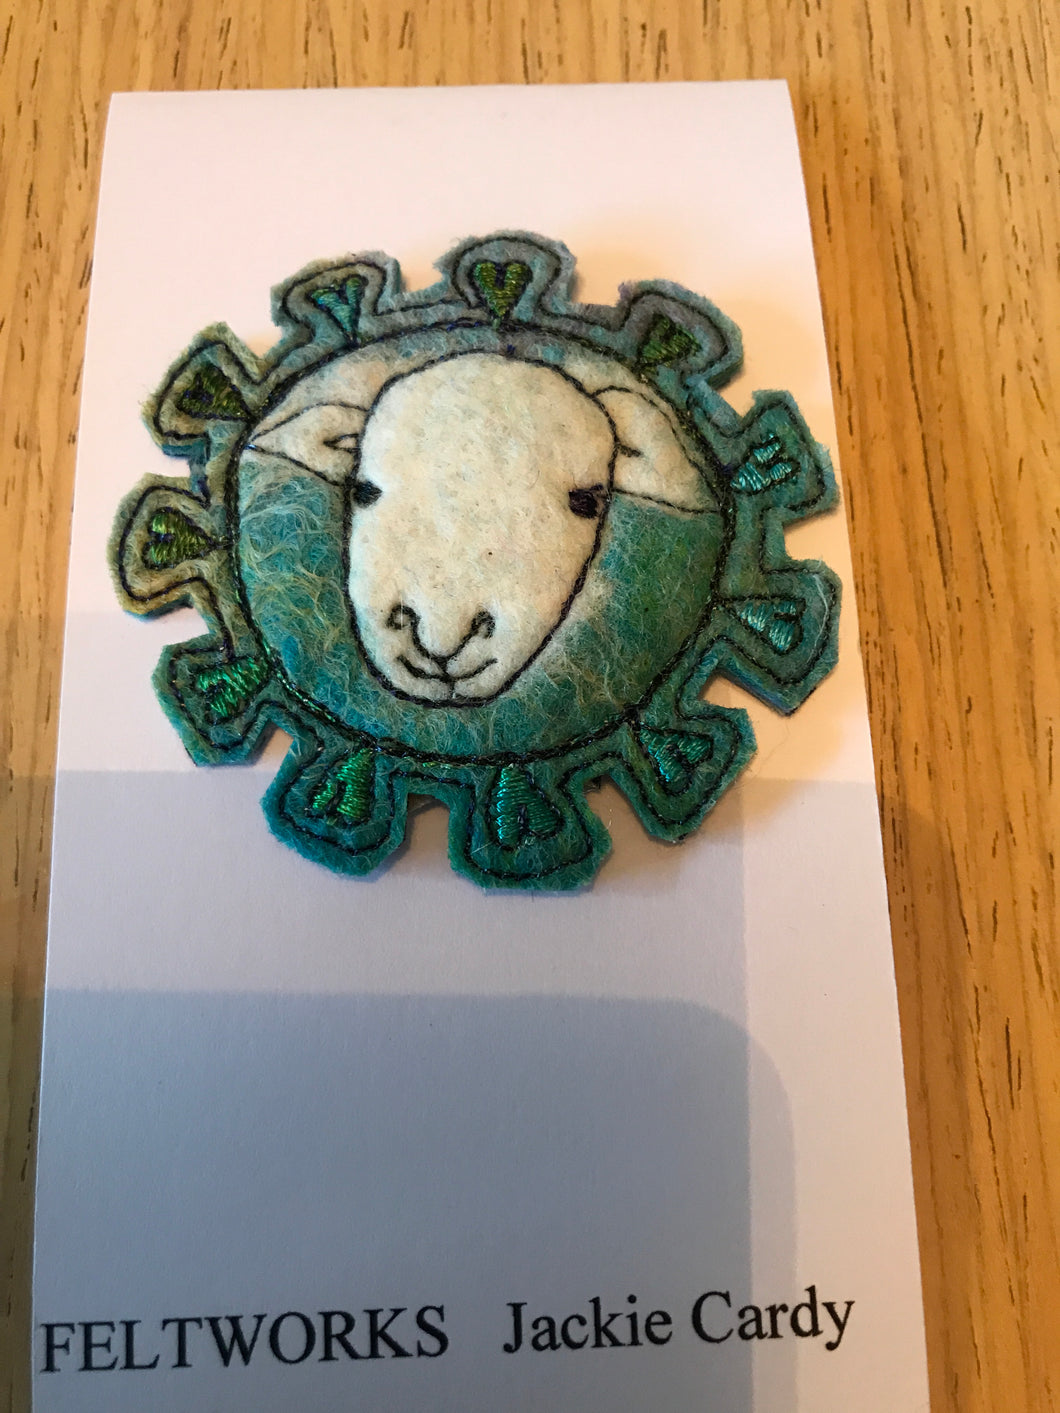 Handmade felt sheep brooch by Feltworks Jackie Cardy No 9